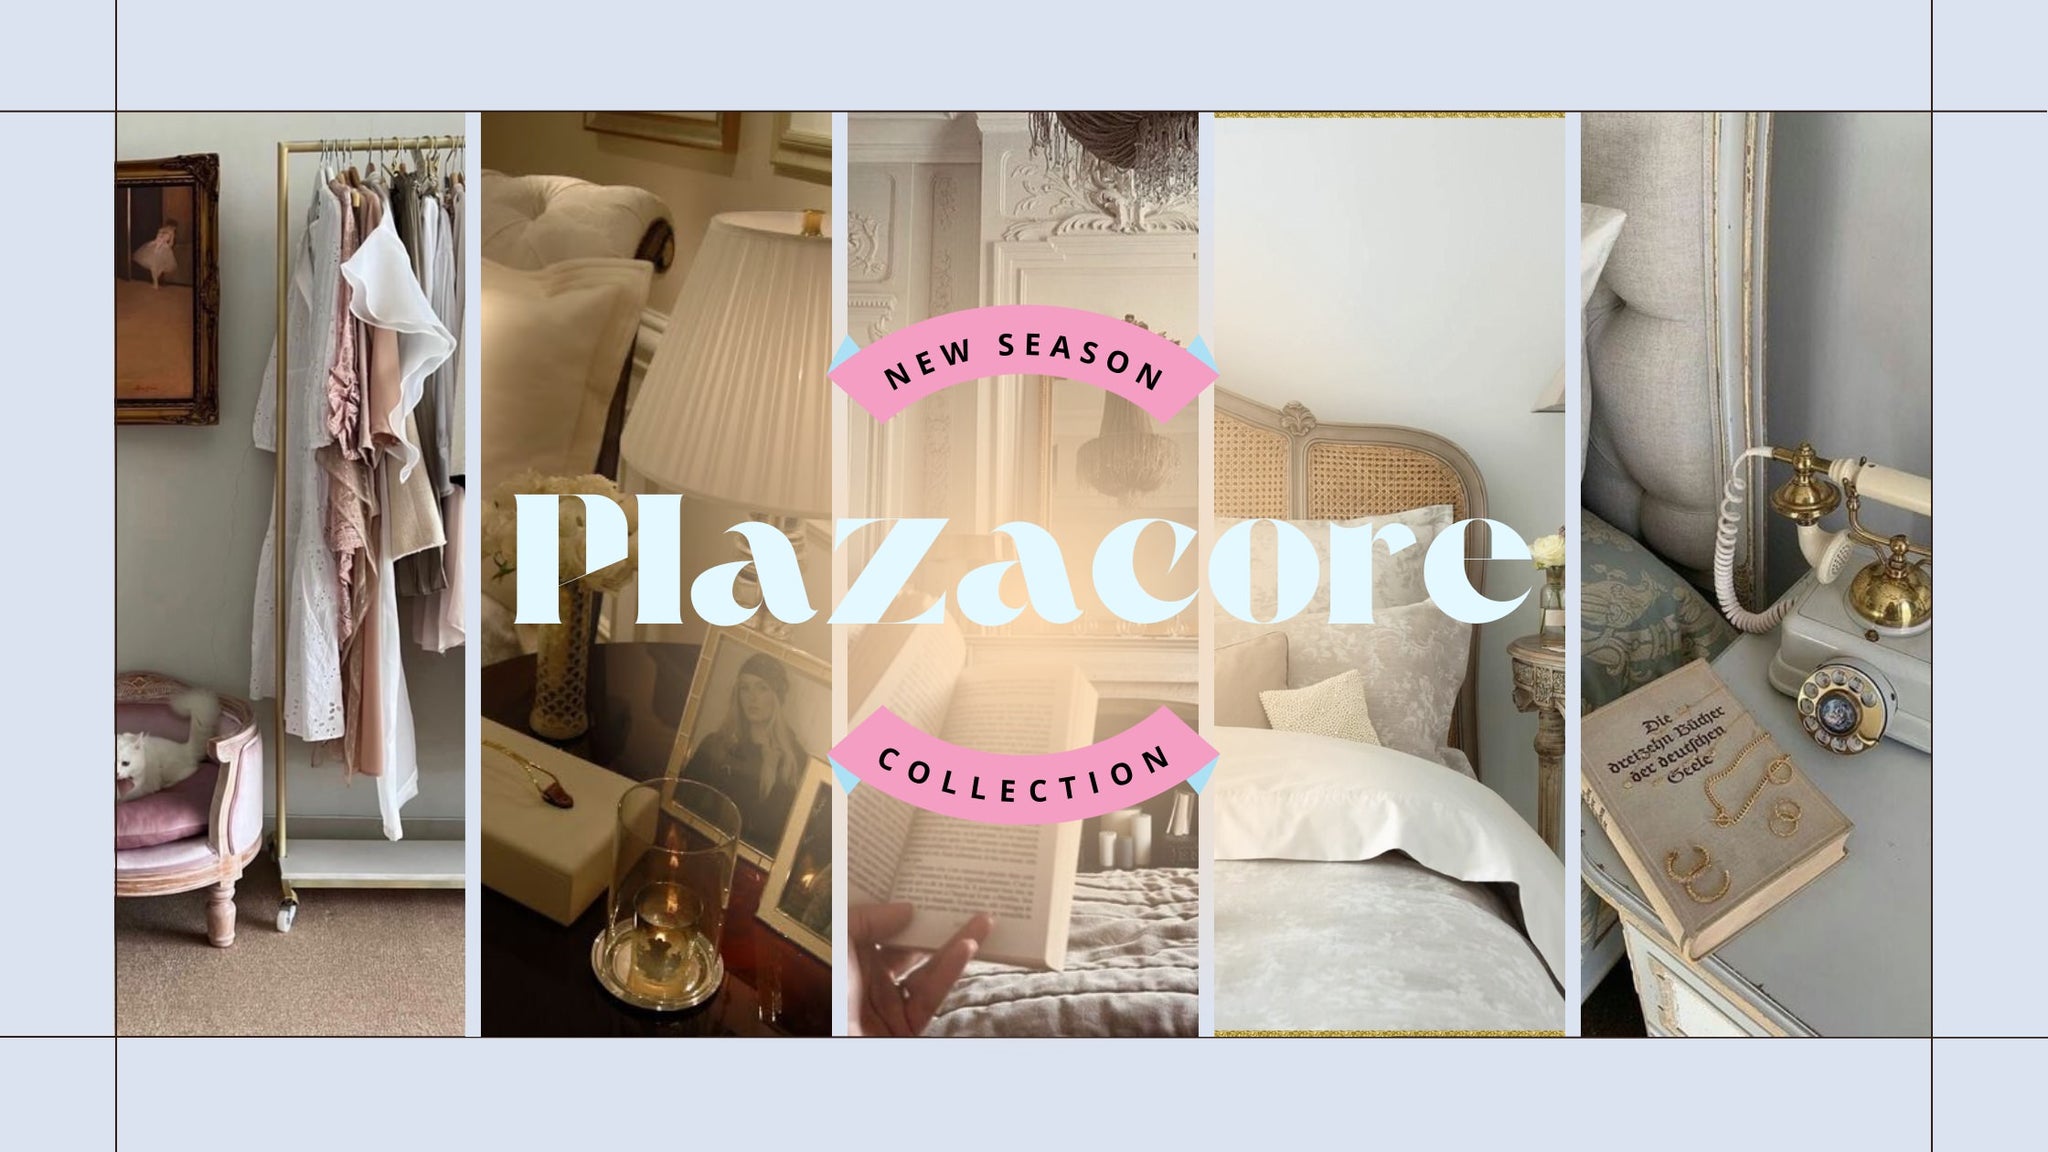 plazacore aesthetic room decor ideas